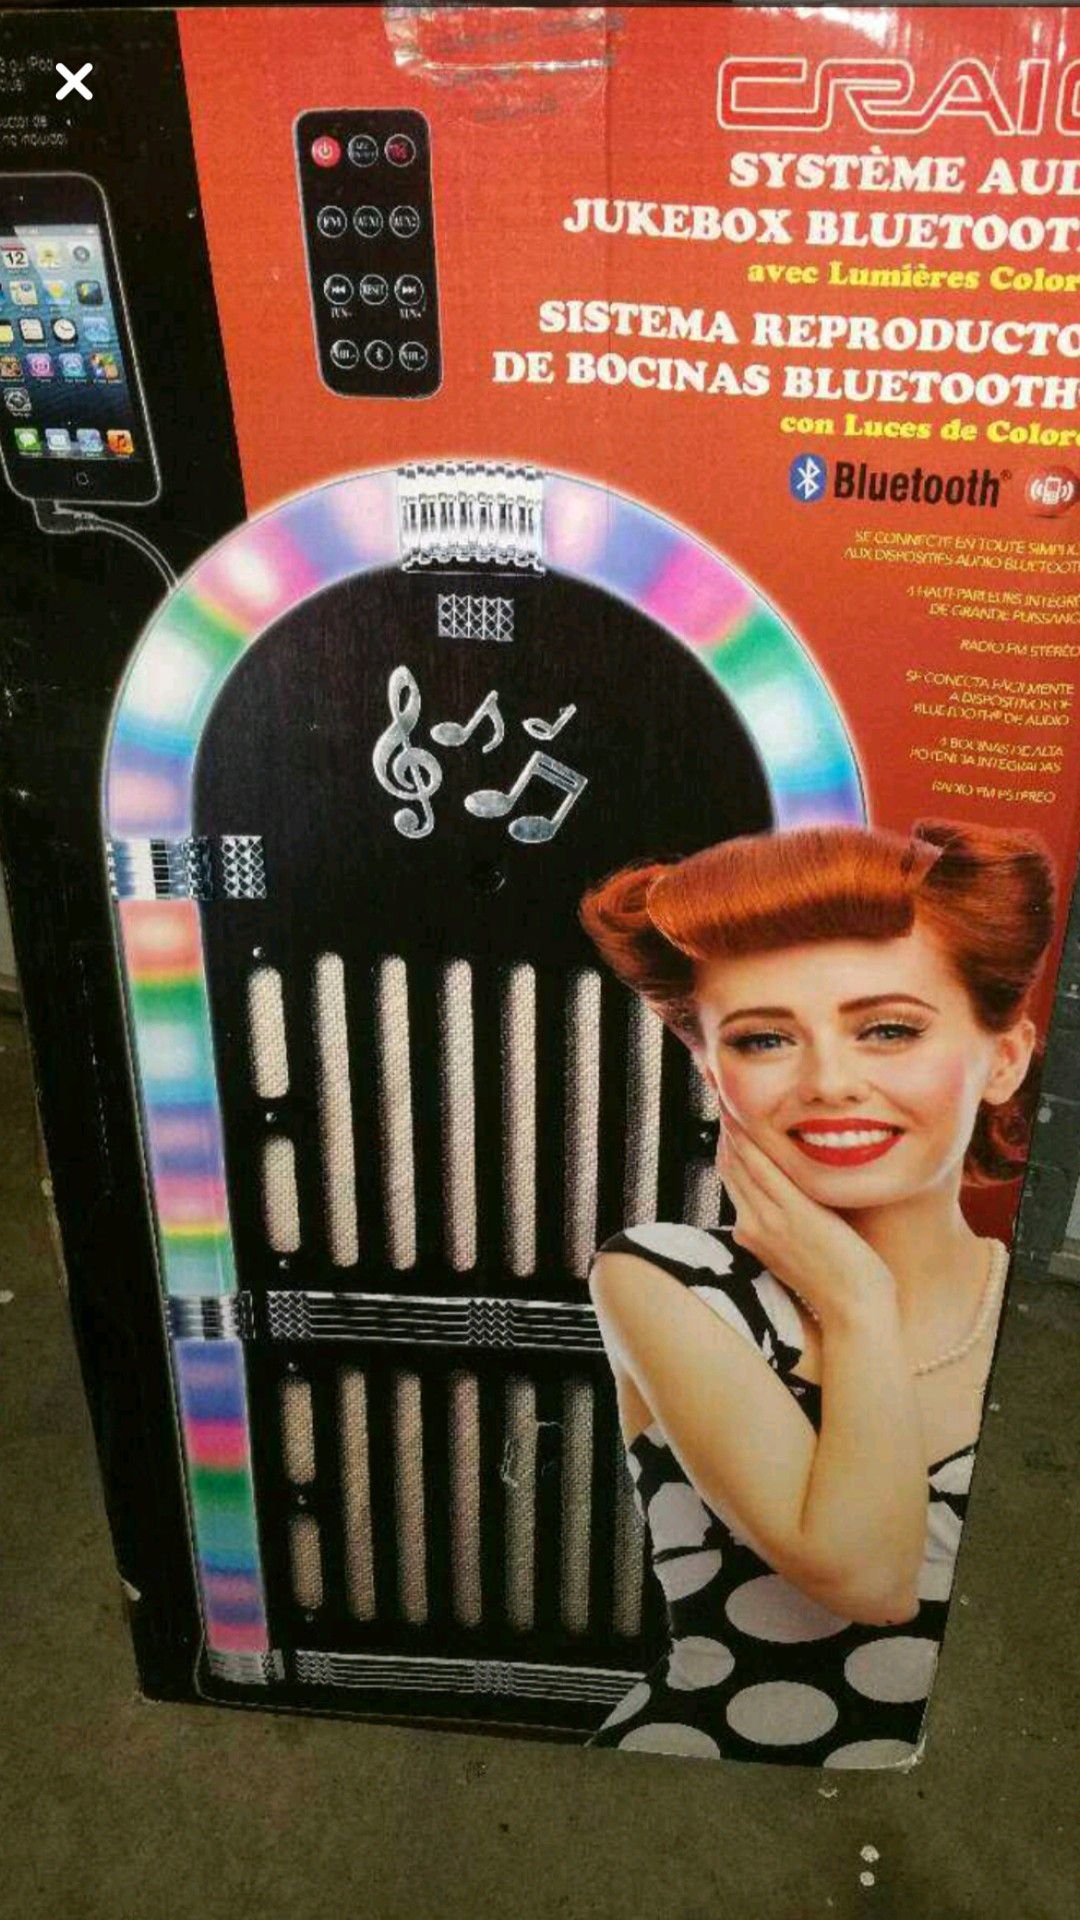 Brand new jukebox with bluetooth speaker system